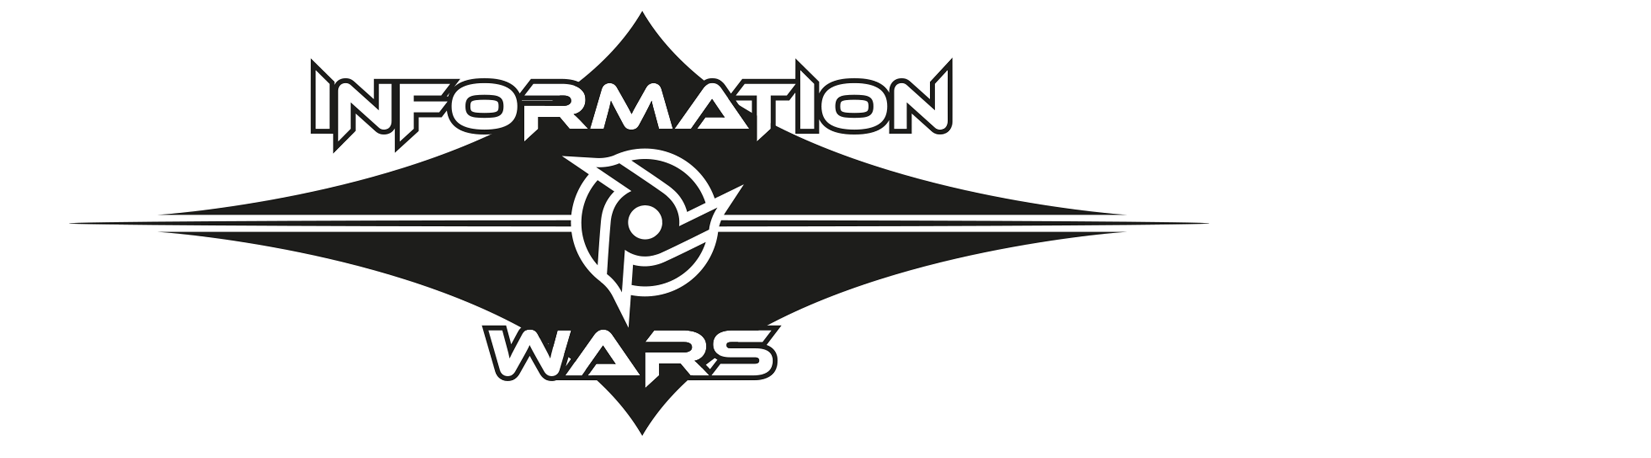 Information Wars Logo